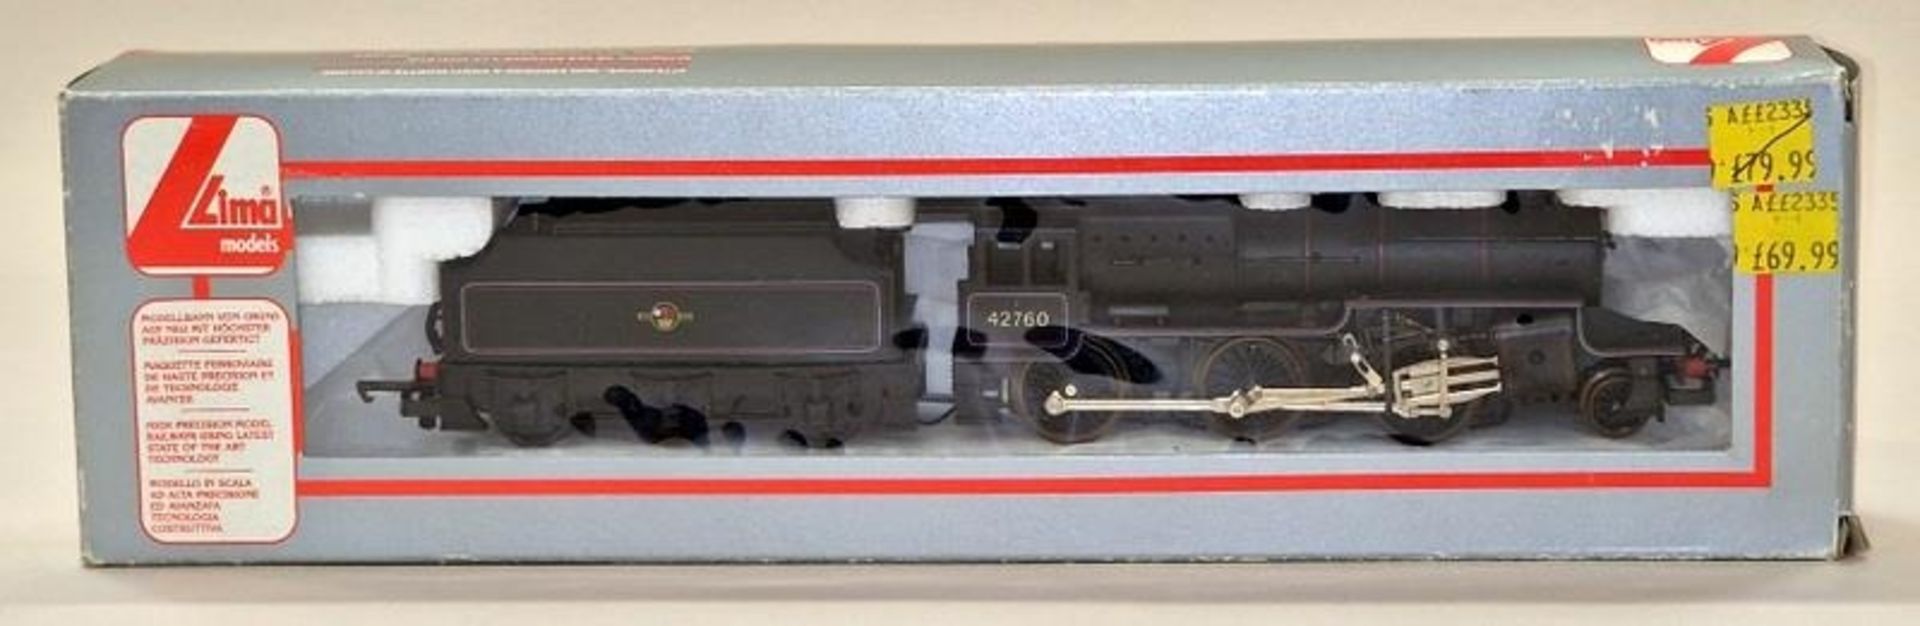 Lima models OO Gauge British Railways "Crab" Class Locomotive No. 42760 in unused condition with